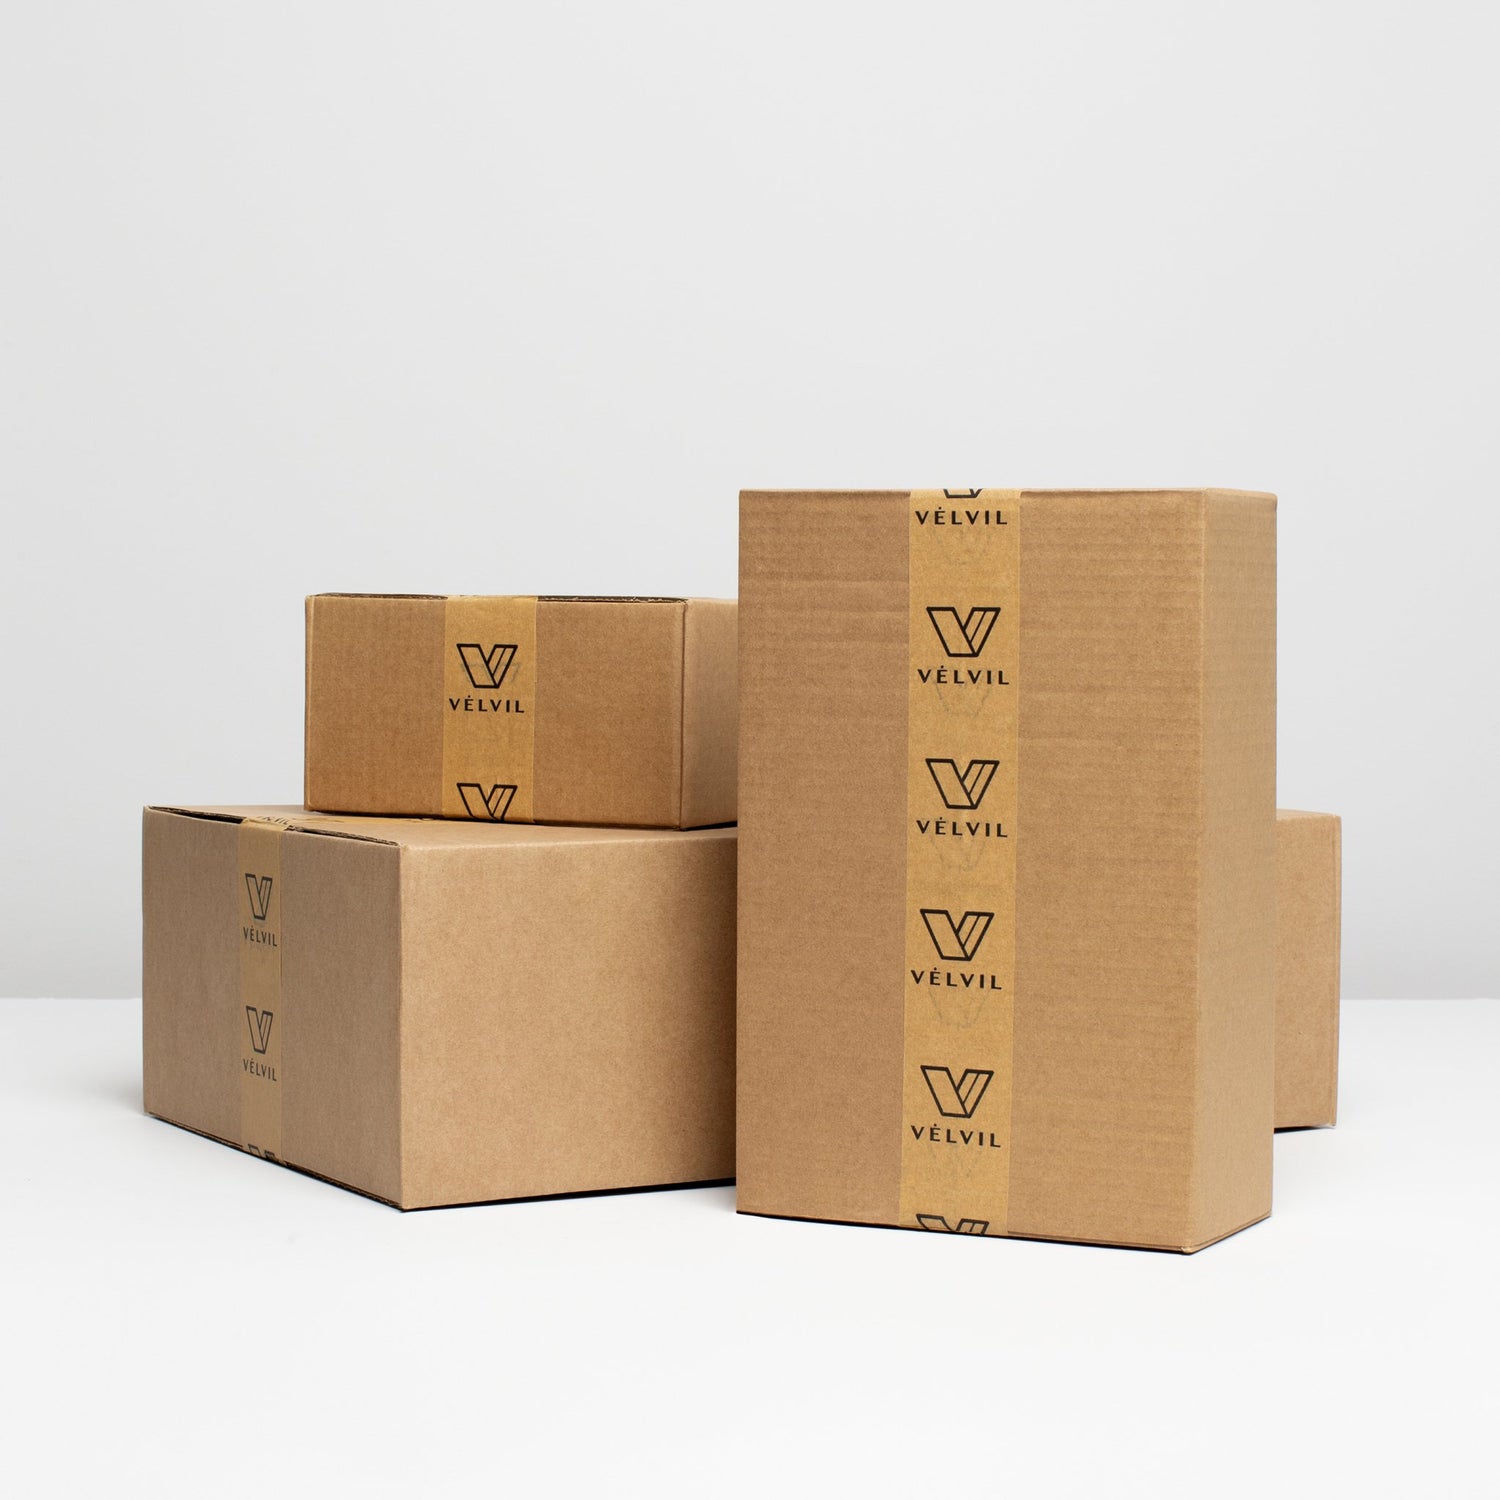 Velvil shipping boxes